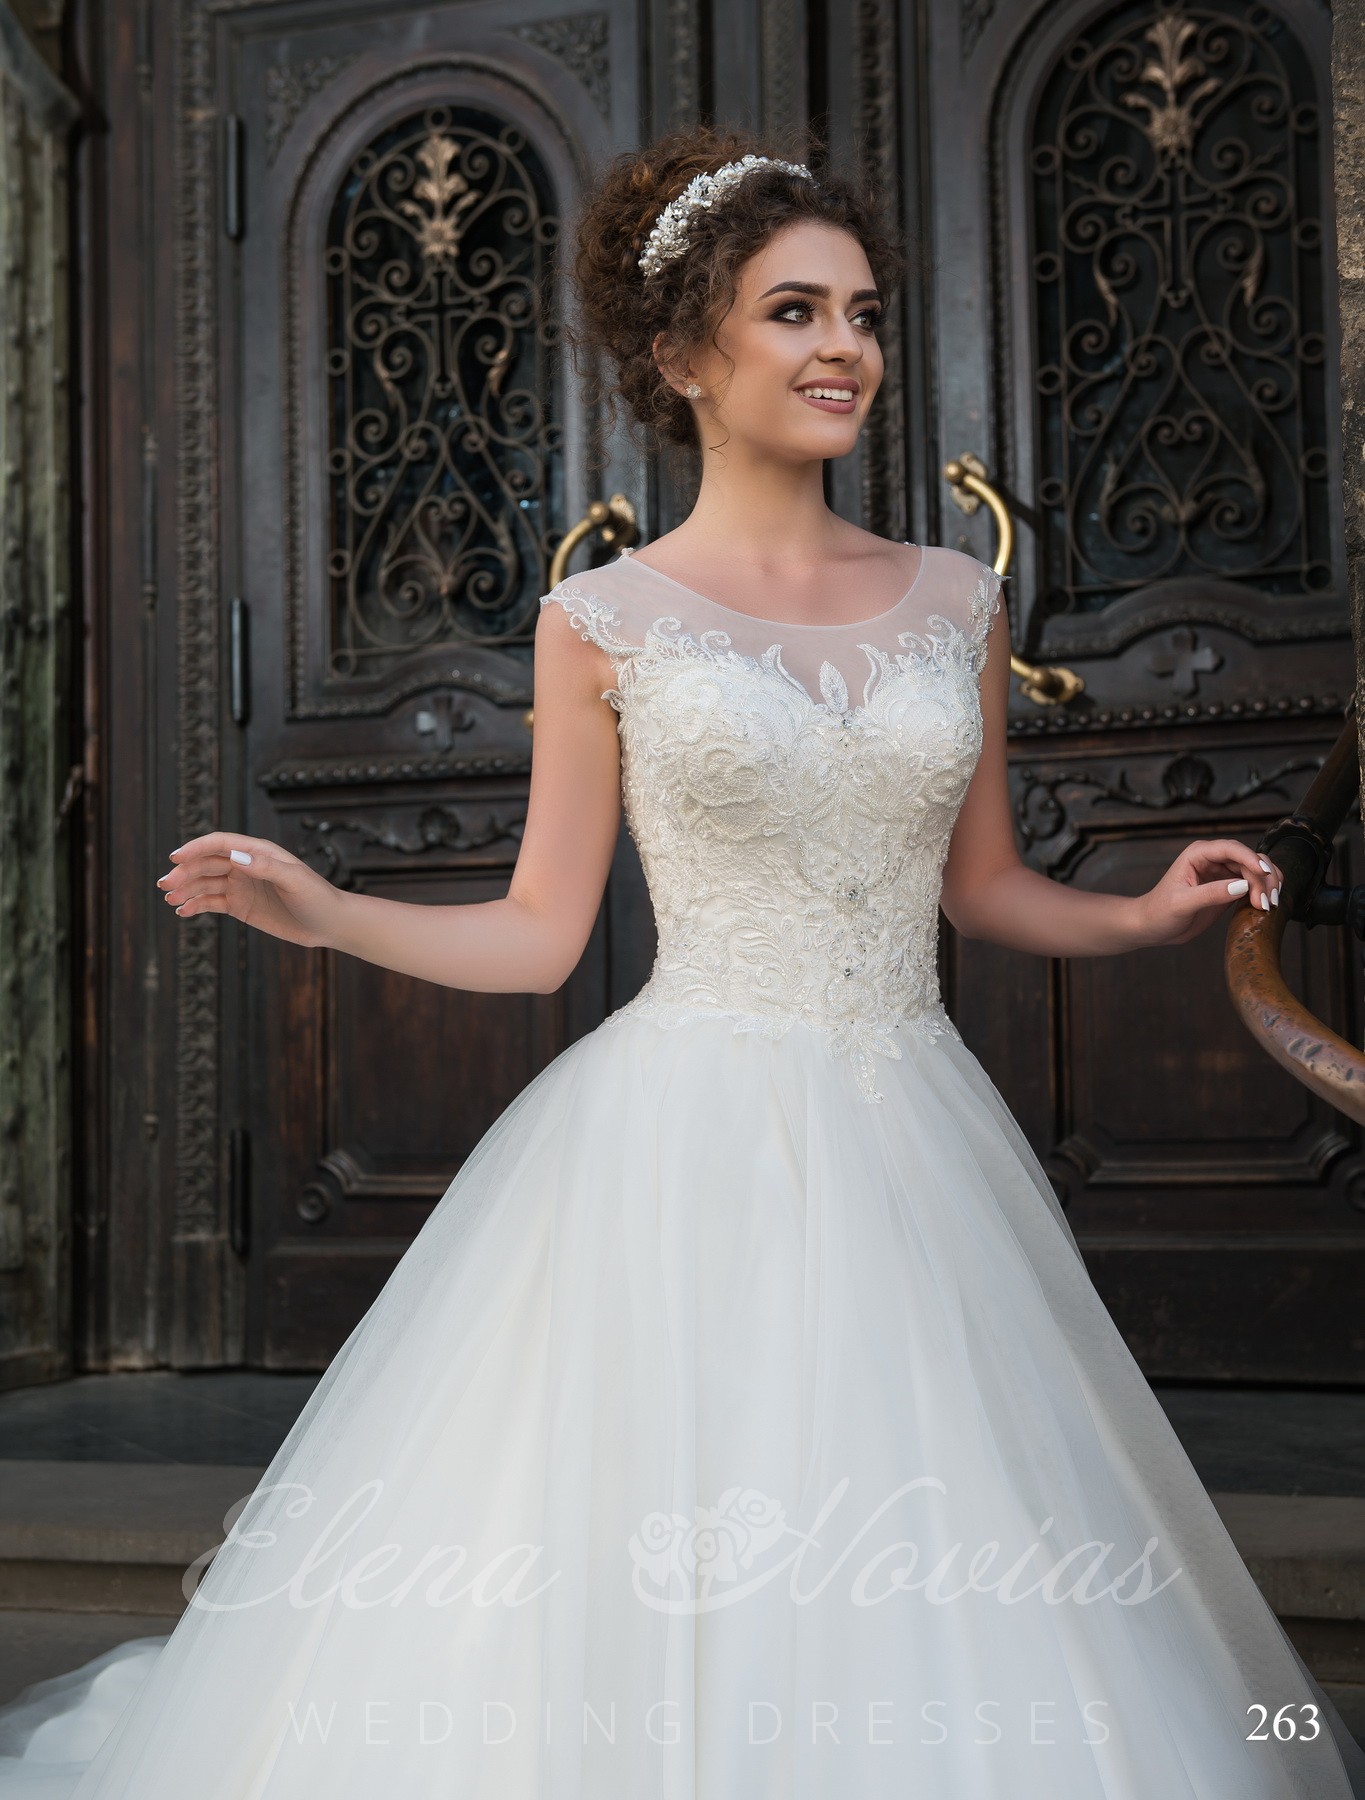 Wedding dress with a transparent back model 263